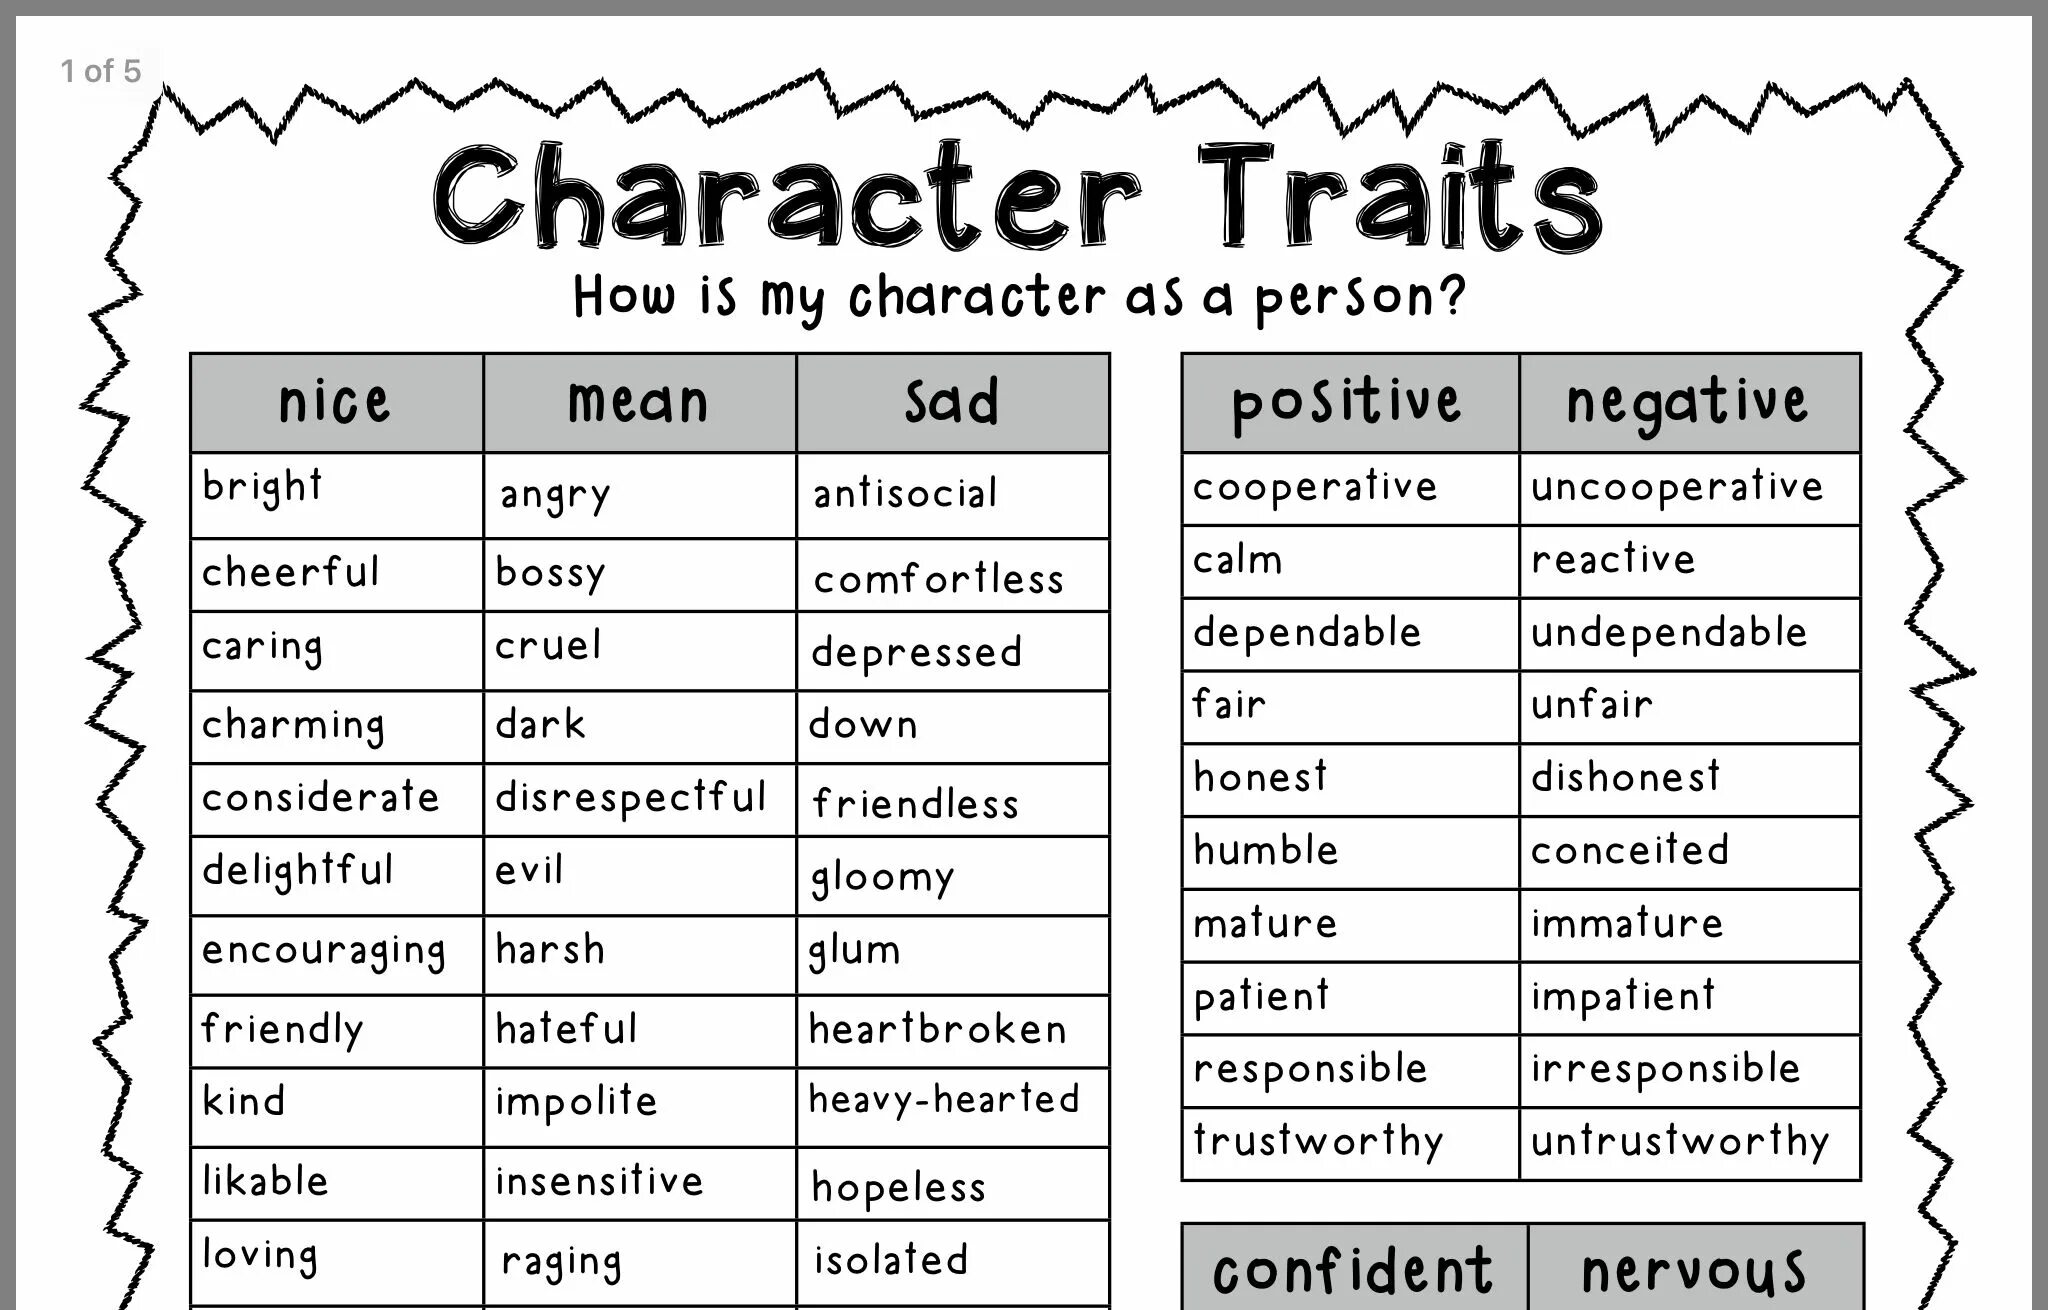 People's characteristics